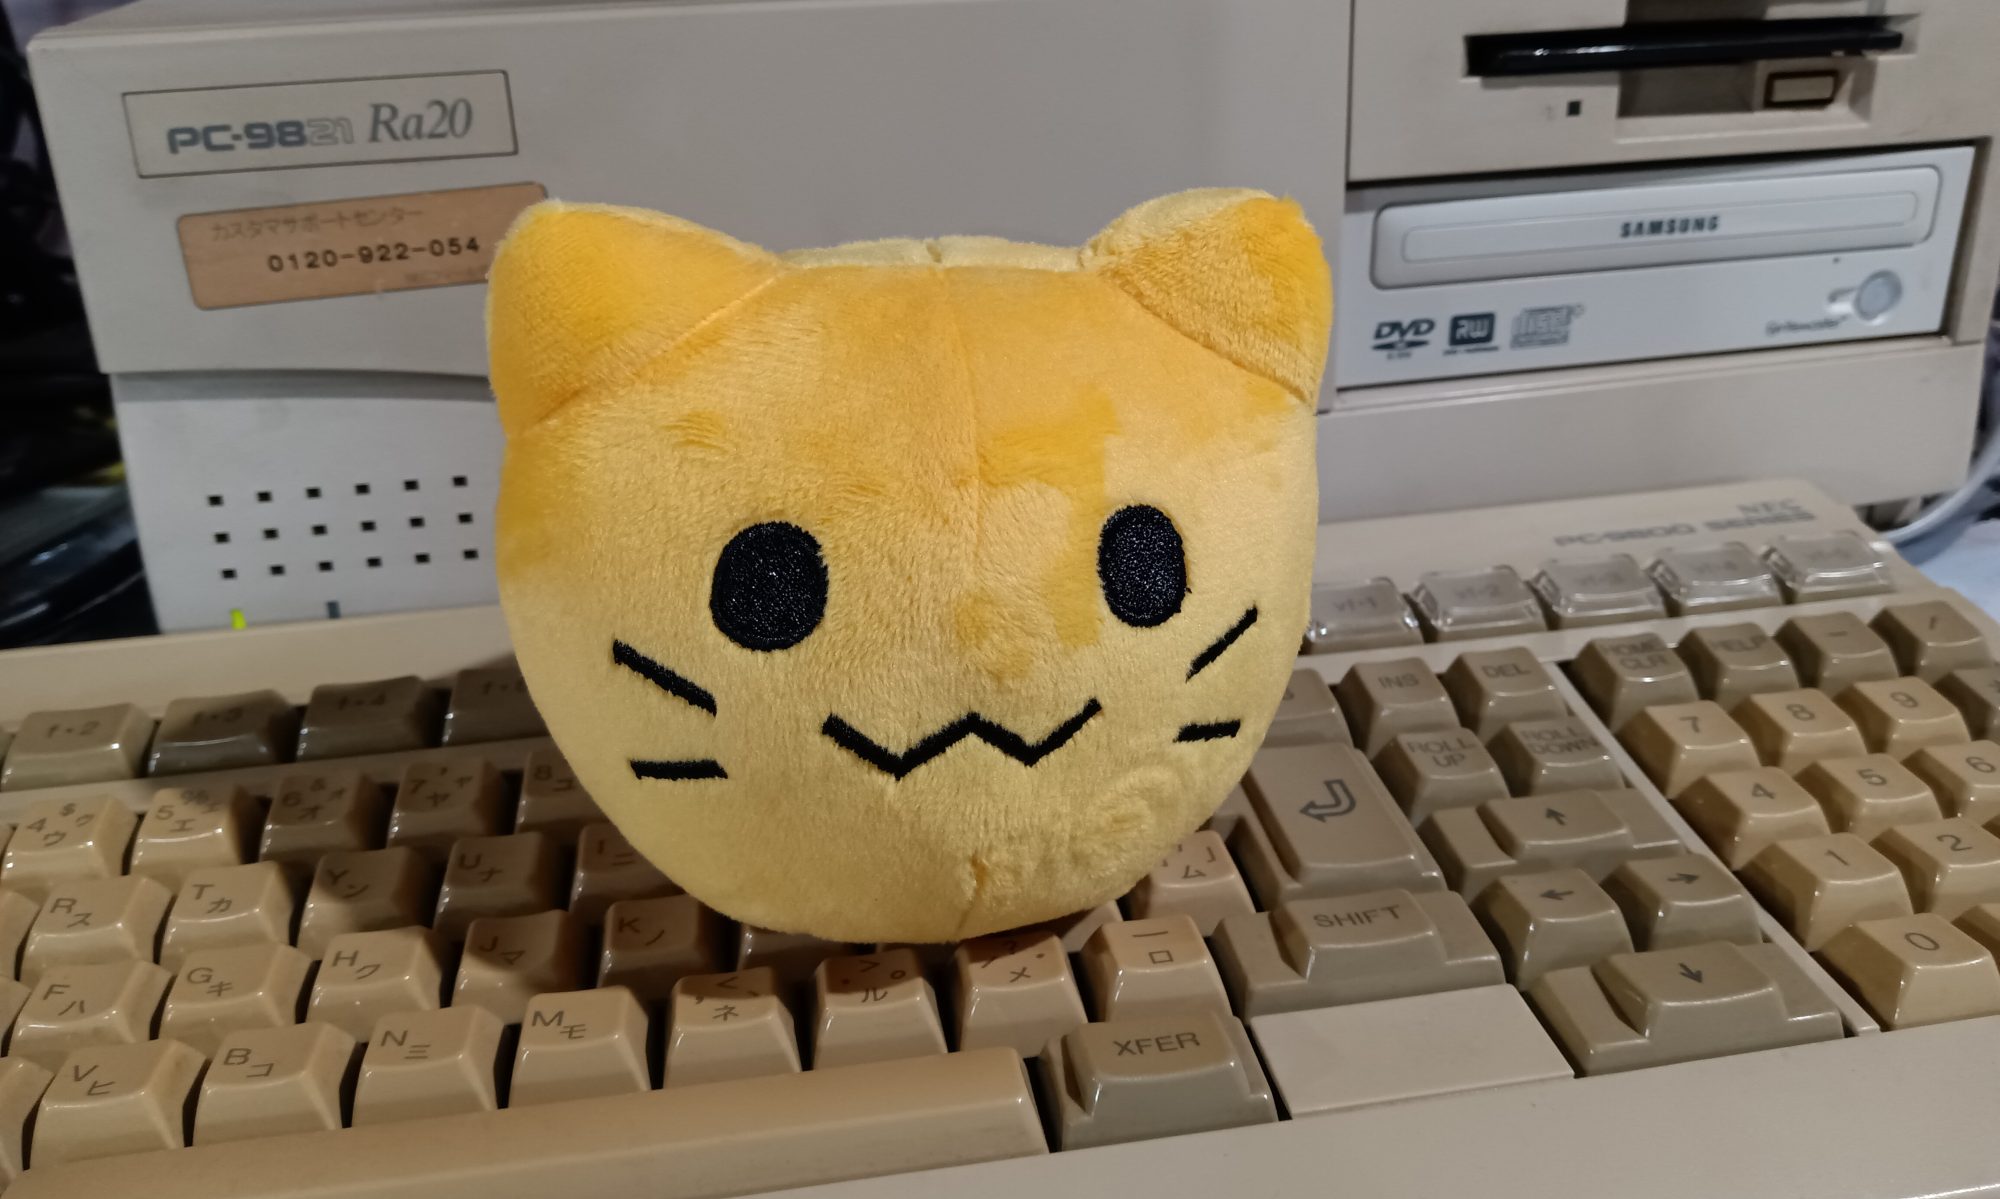 blobcat plush on the keyboard of a PC-9821Ra20